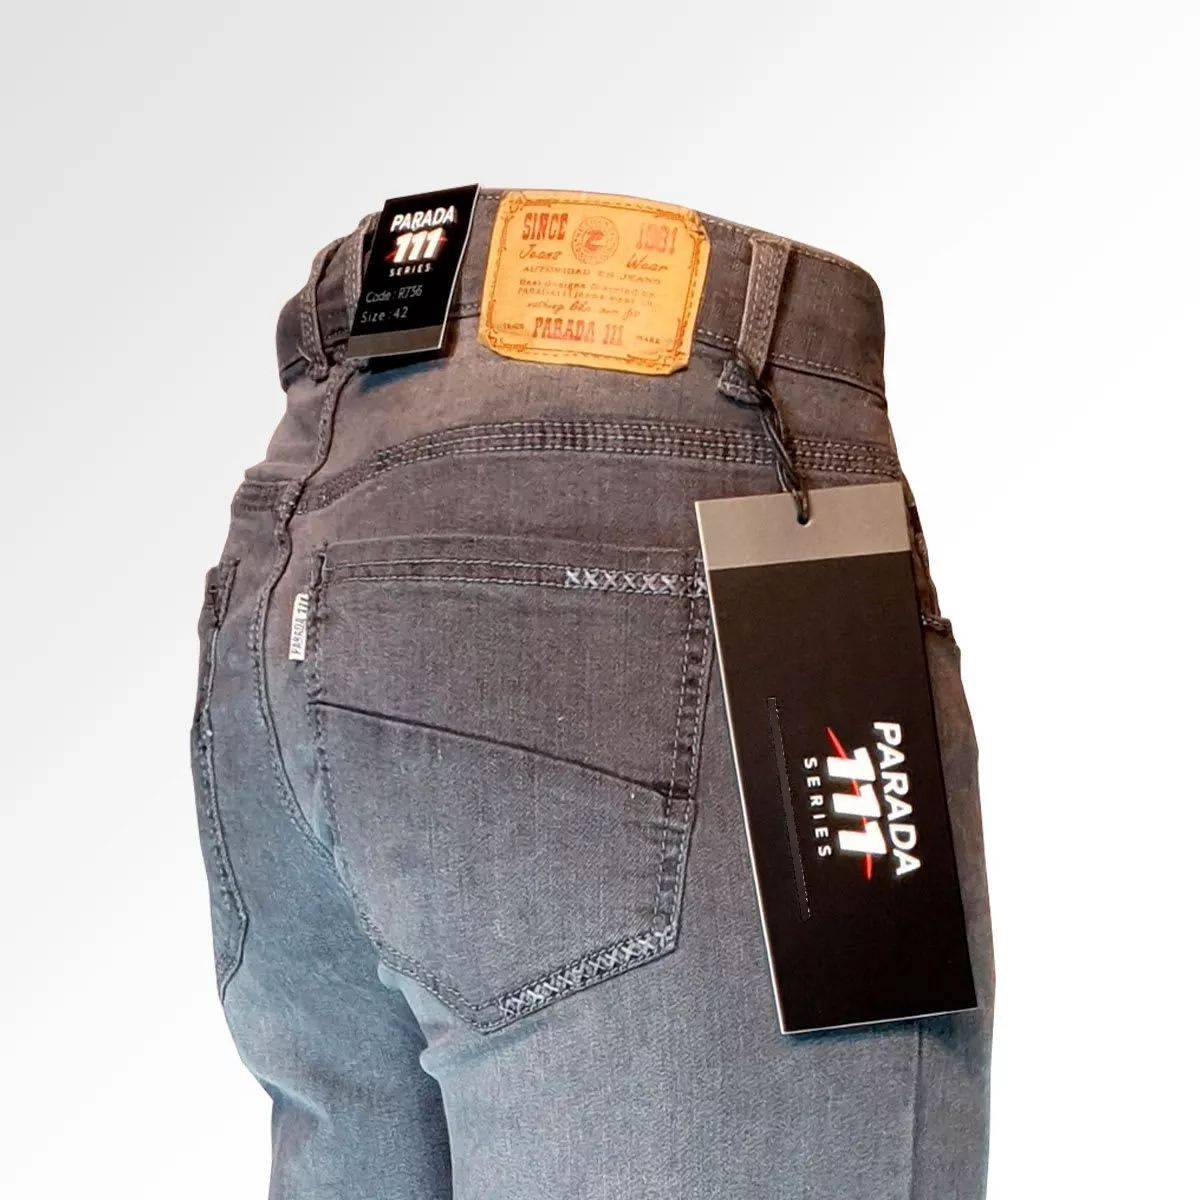 Jeans Parada 111 Series R736